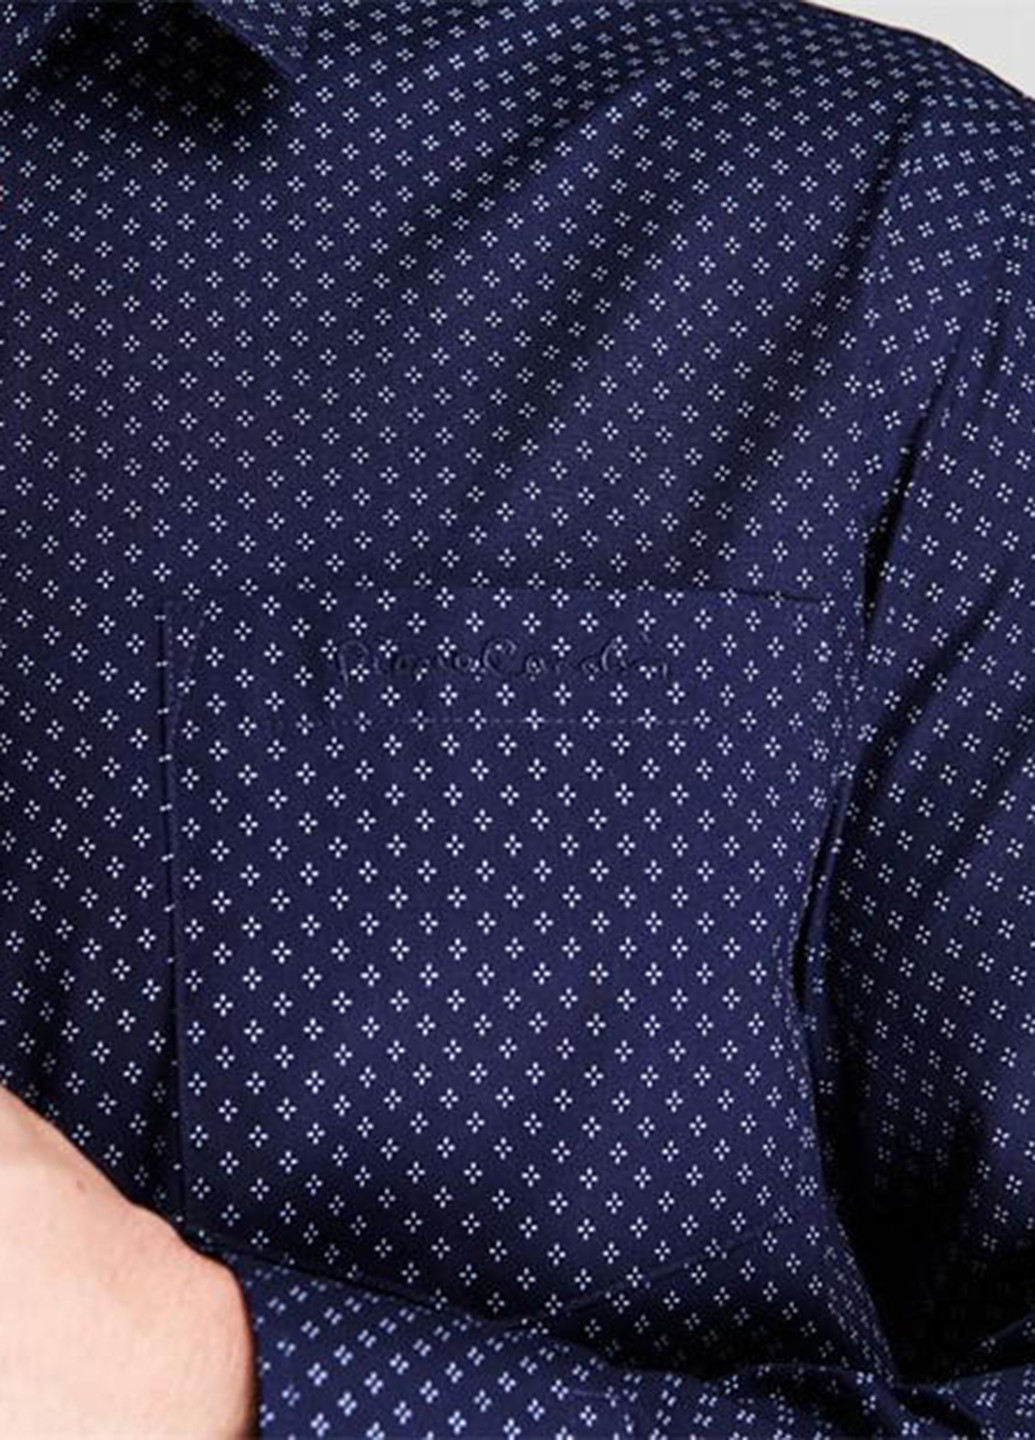 Темно-синяя кэжуал рубашка с геометрическим узором Pierre Cardin